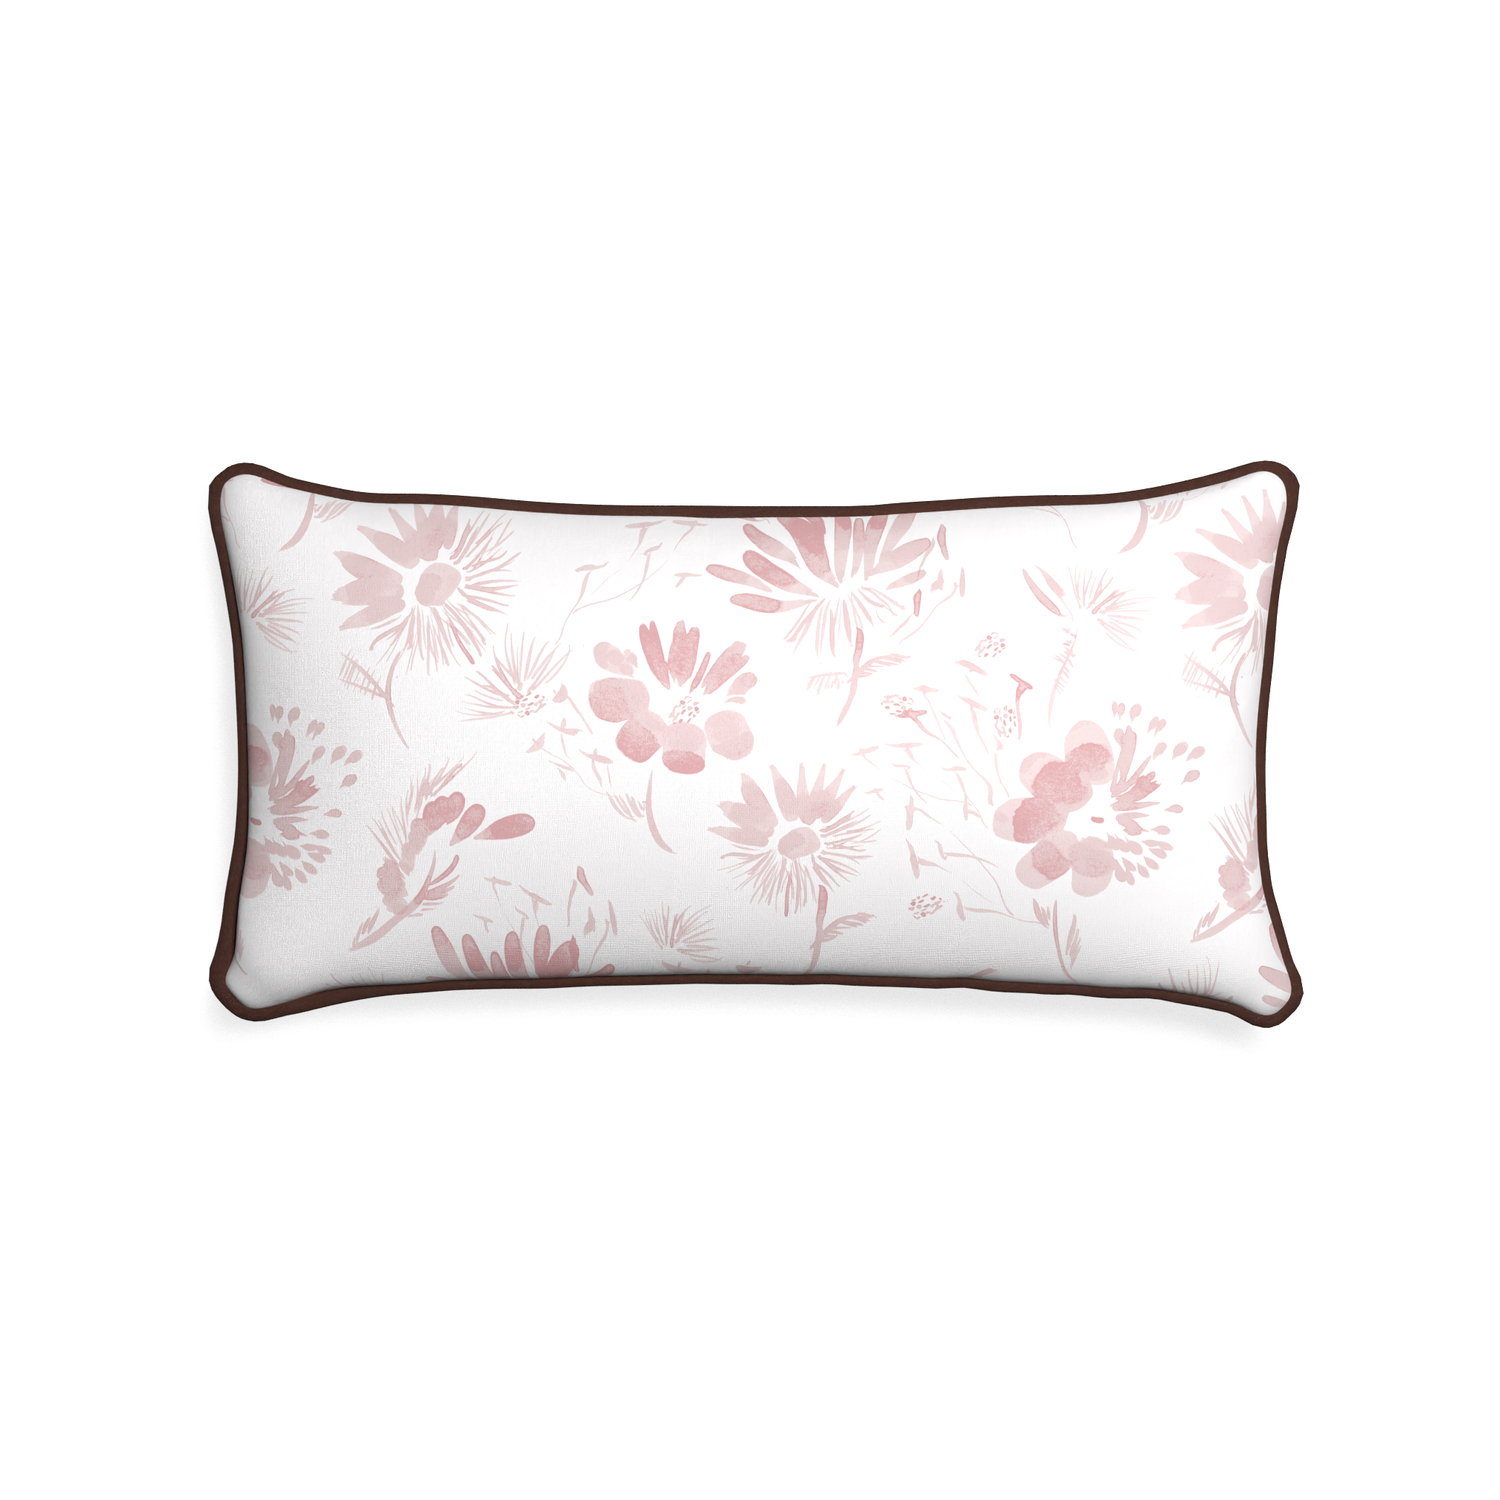 Midi-lumbar blake custom pink floralpillow with w piping on white background